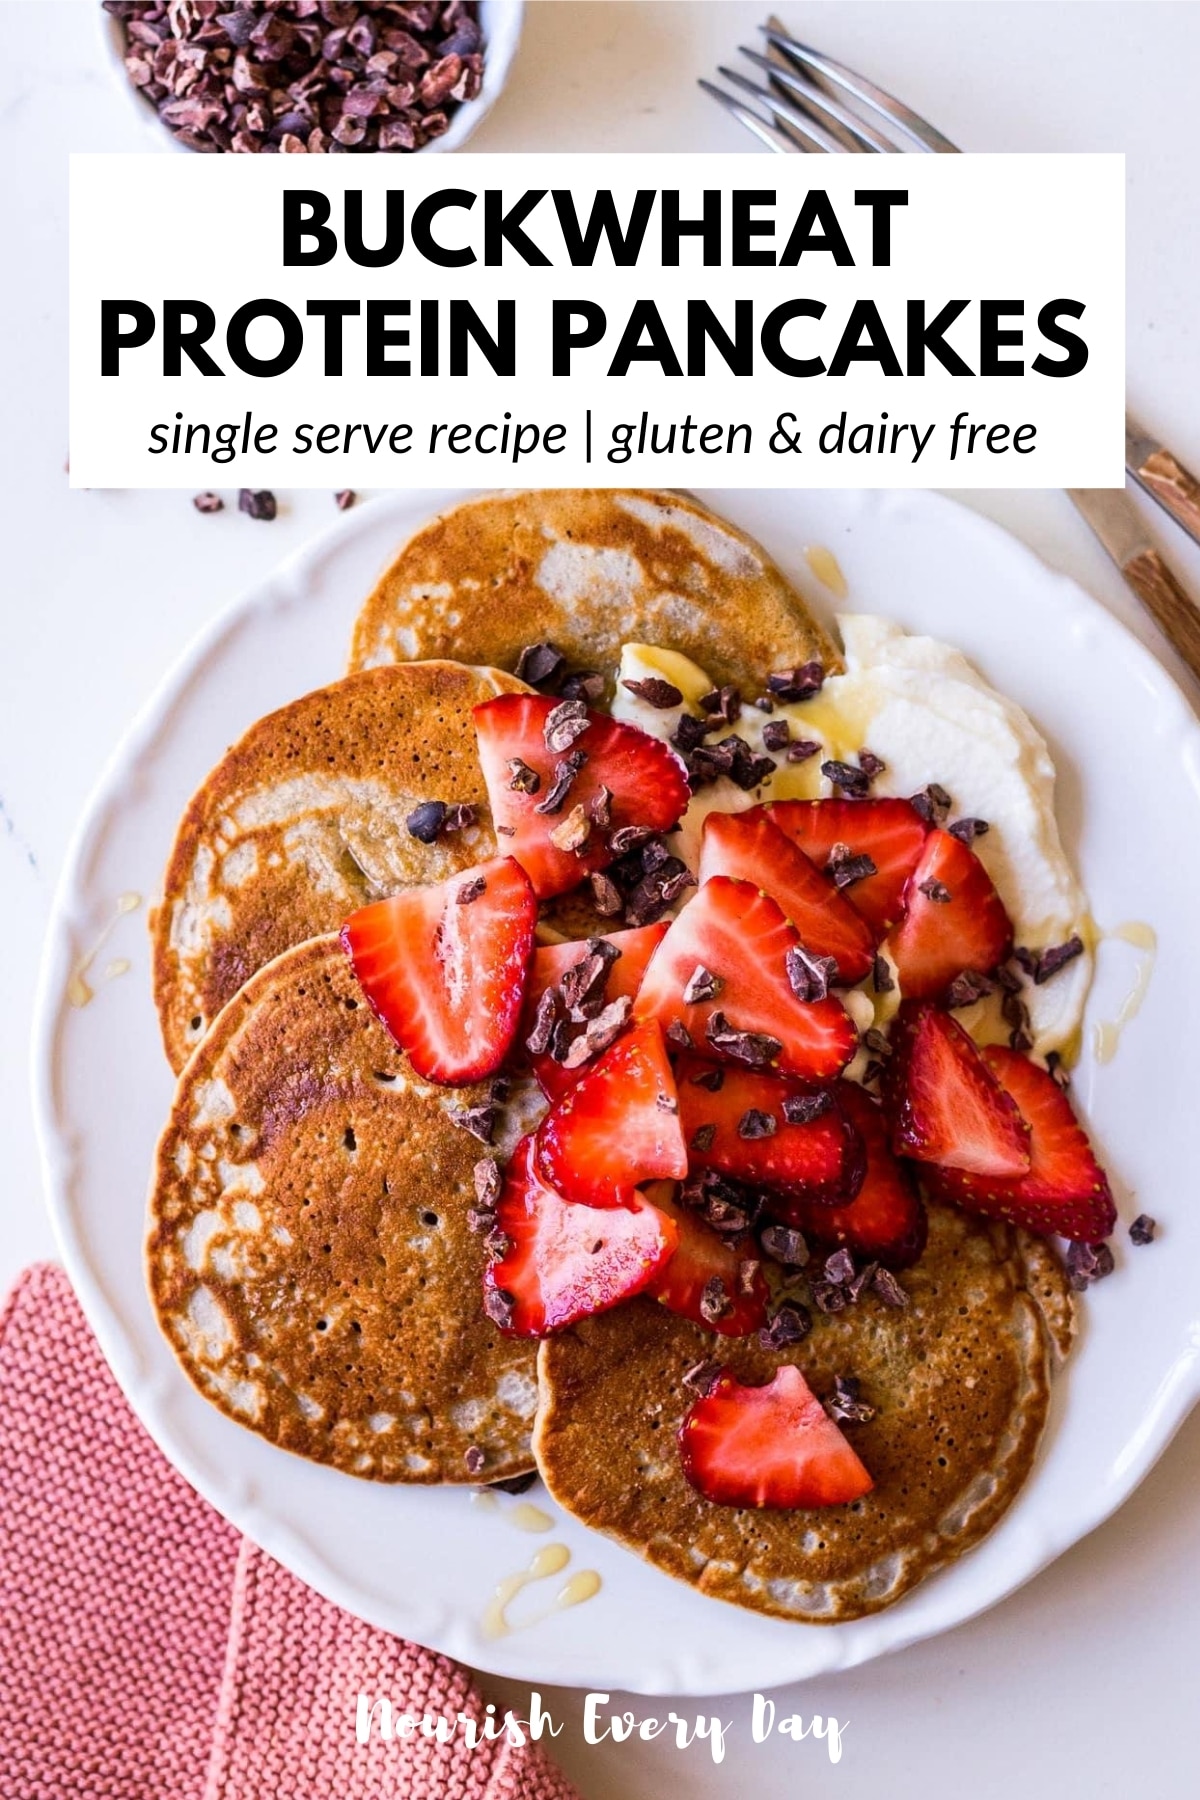 Buckwheat Protein Pancakes Recipe Pinterest Image